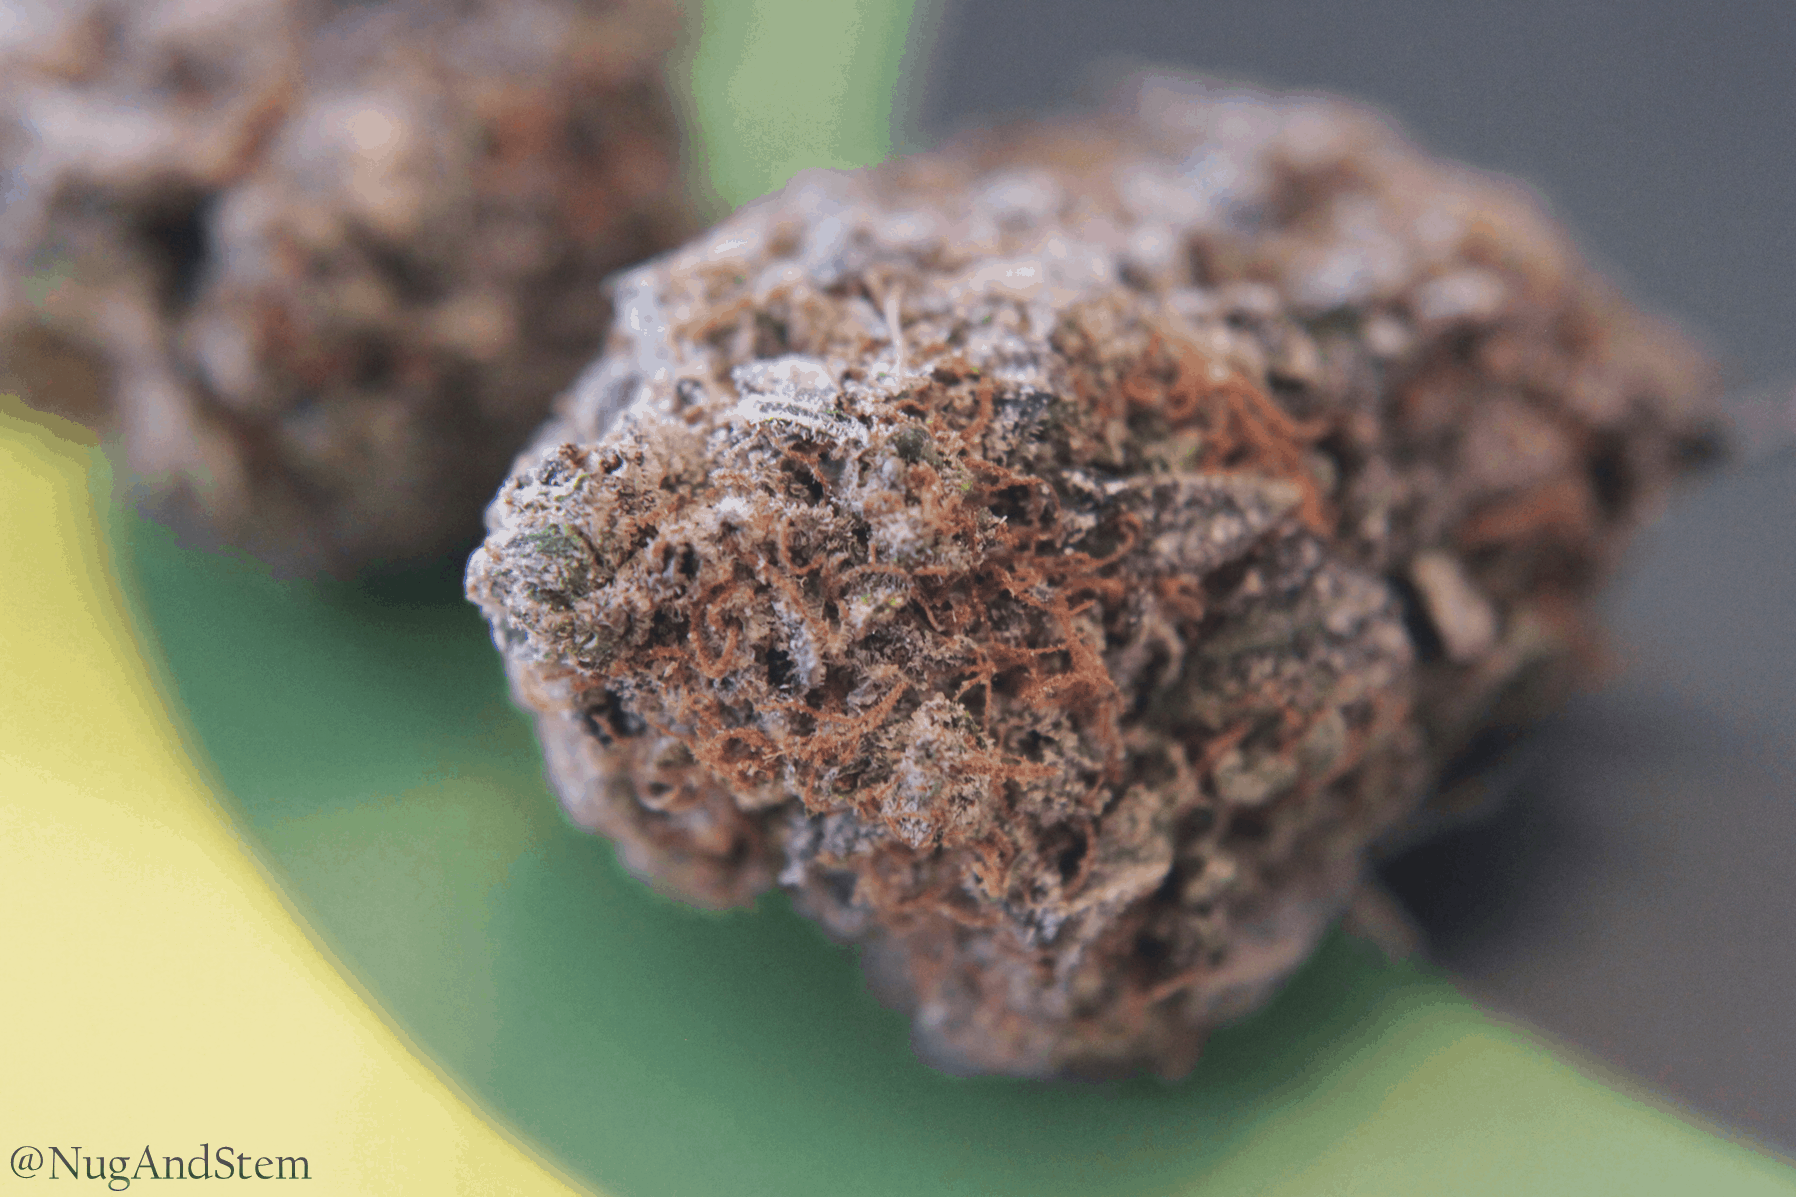 Evergreen Medicinal Review - Save On Cannabis Mail Order Marijuana Canada Pink Kush